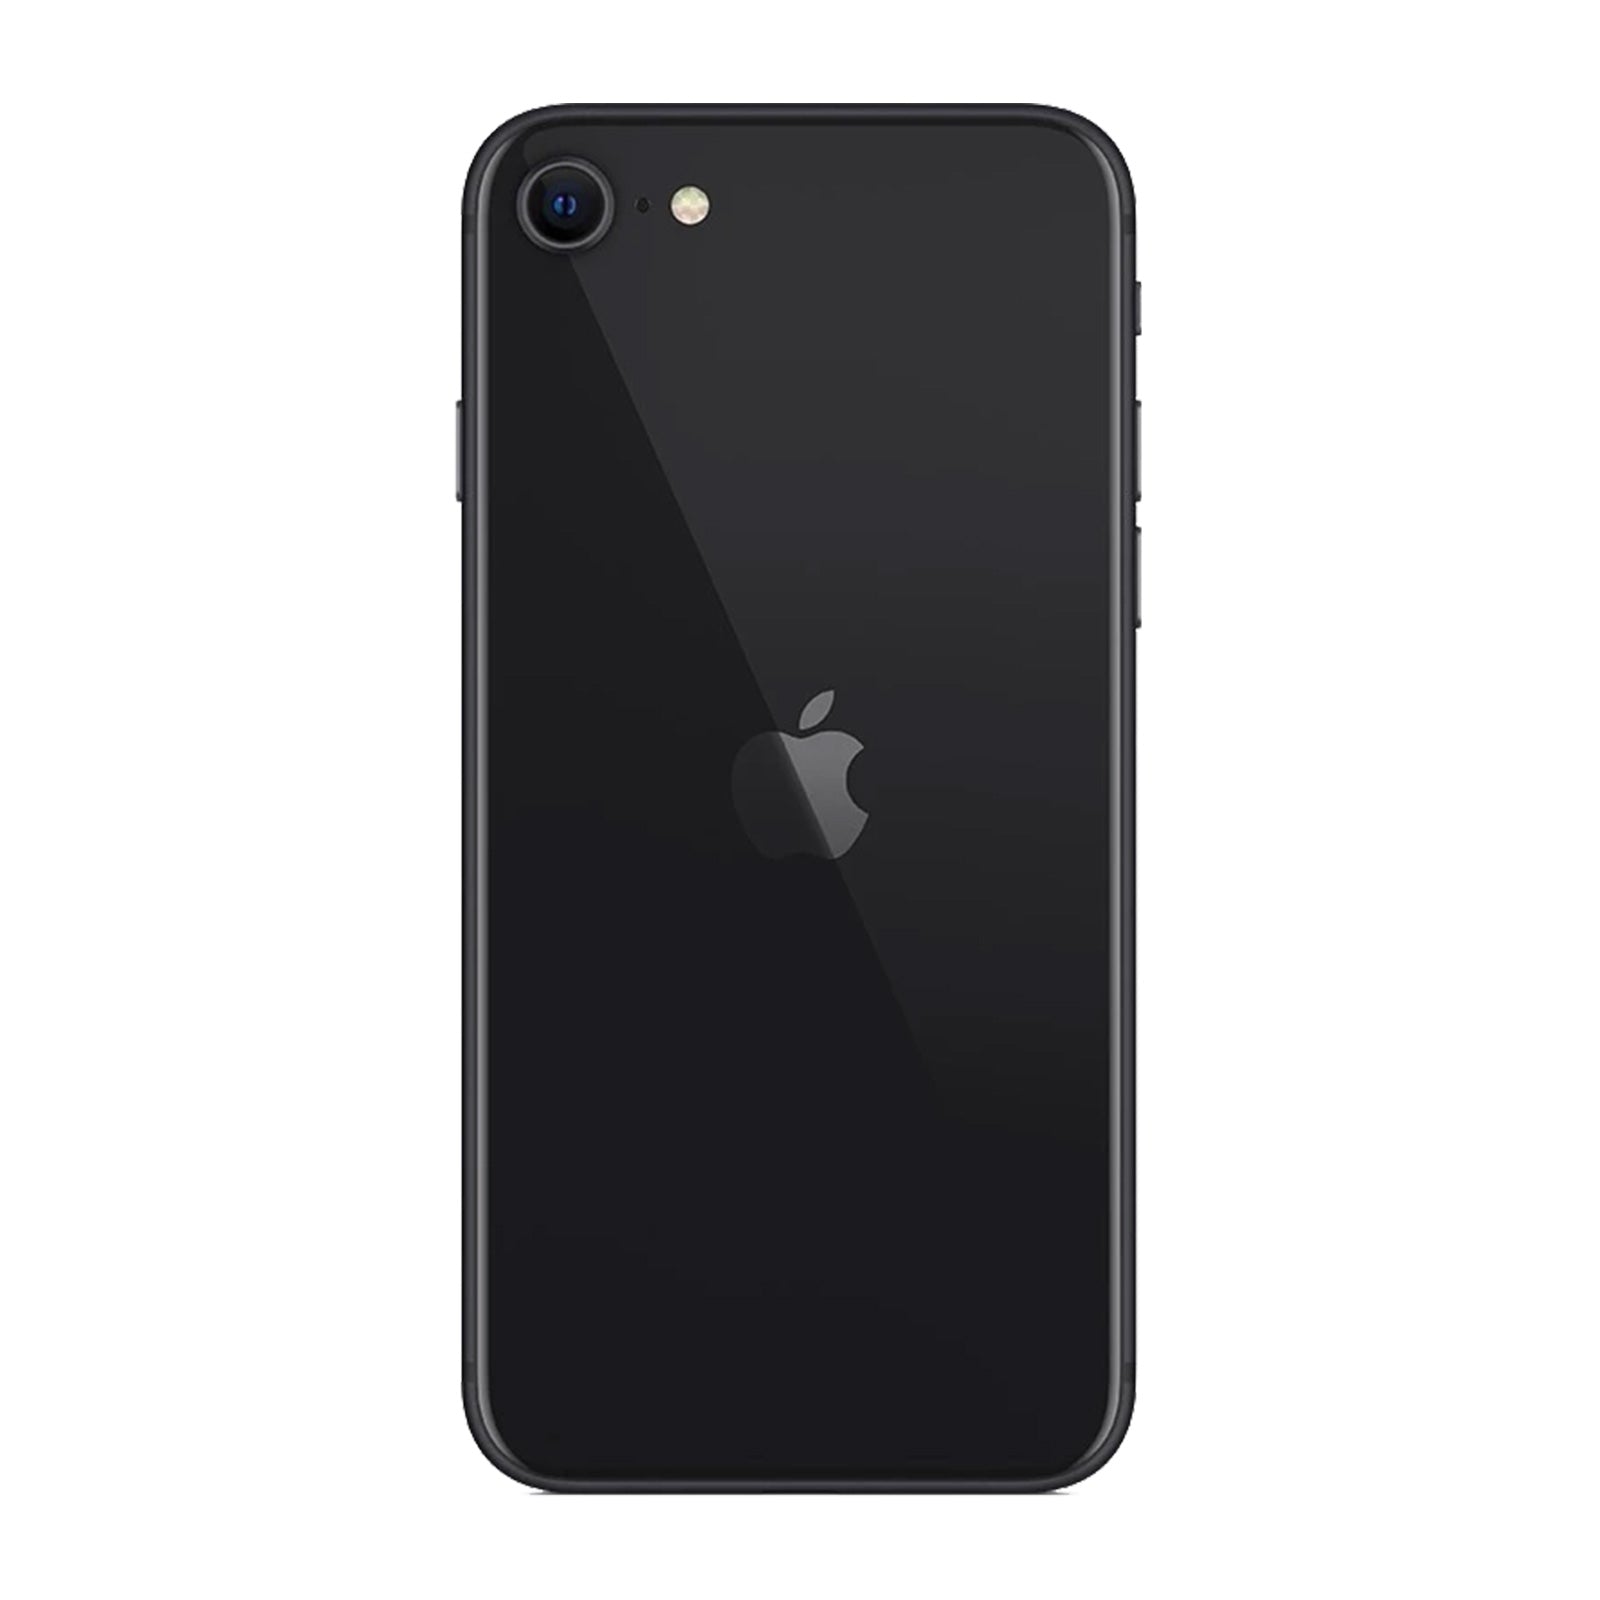 Apple iPhone SE 2nd Gen 256GB Black Very Good T-Mobile